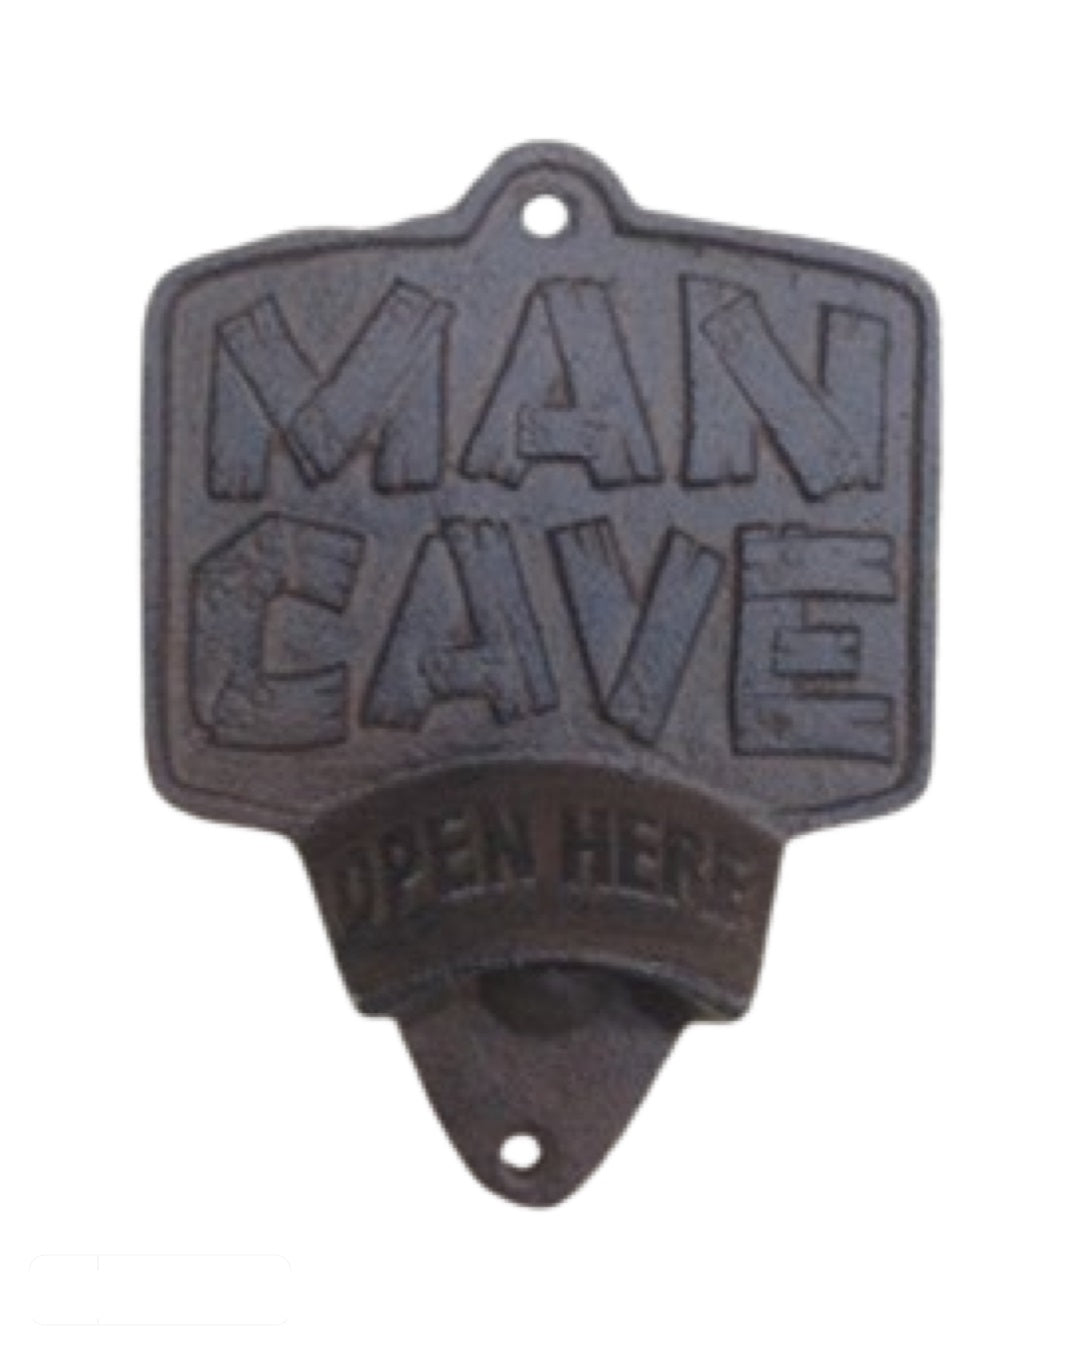 Man cave vintage cast iron bottle opener / wall hook